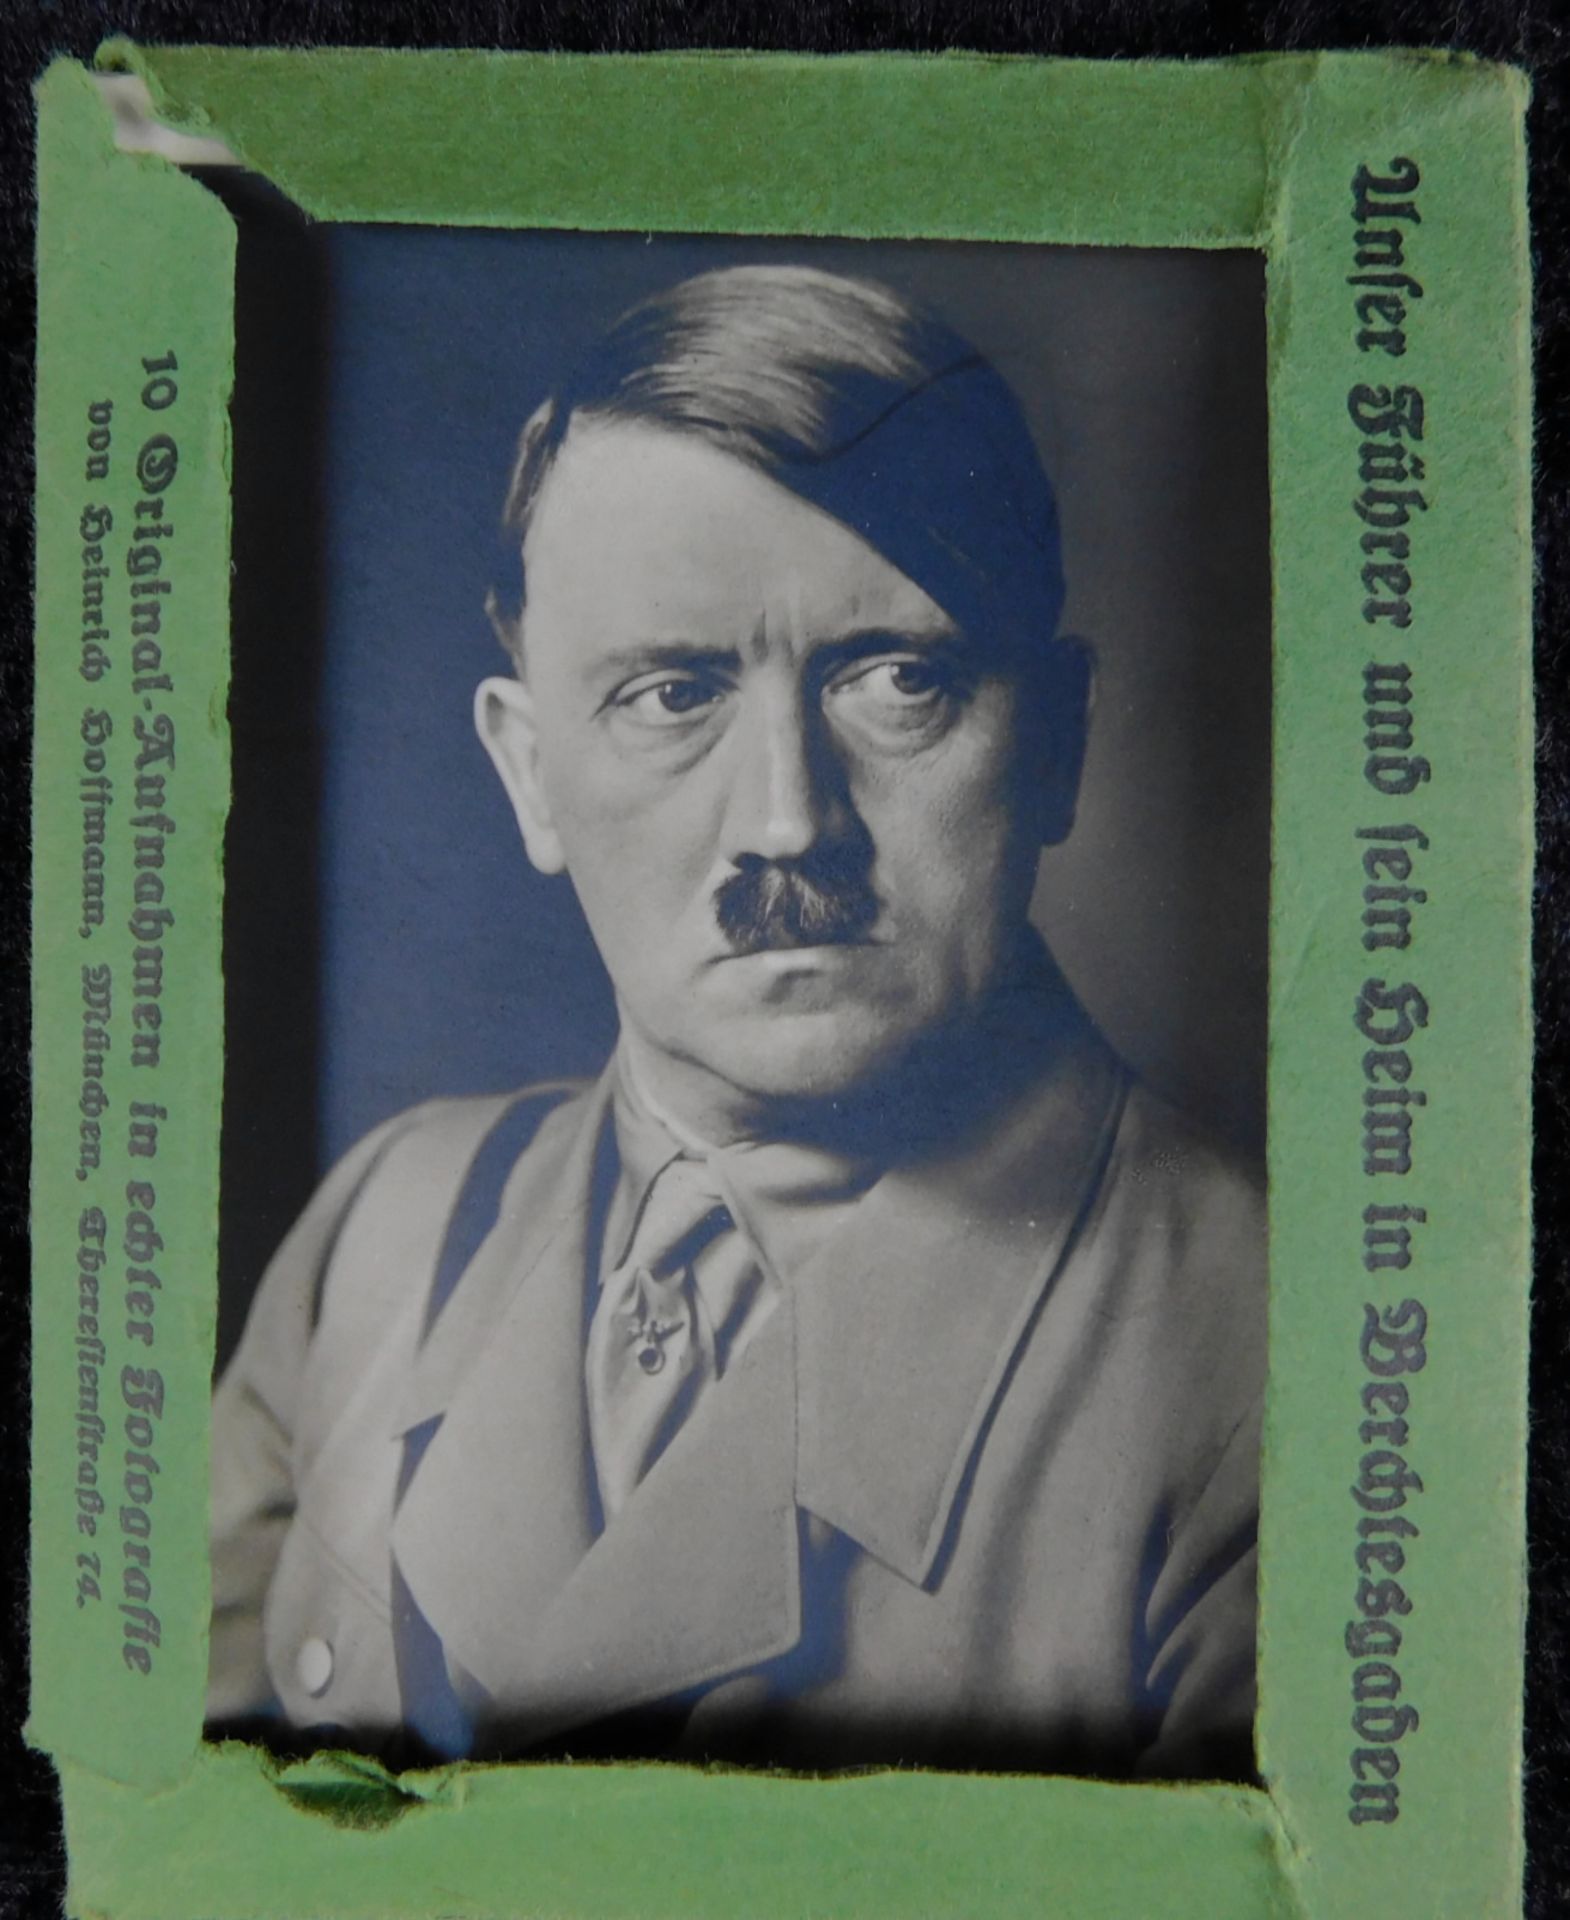 3. Reich, 10 Fotos Hitler Propaganda, Fotos Heinr. Hoffmann, München